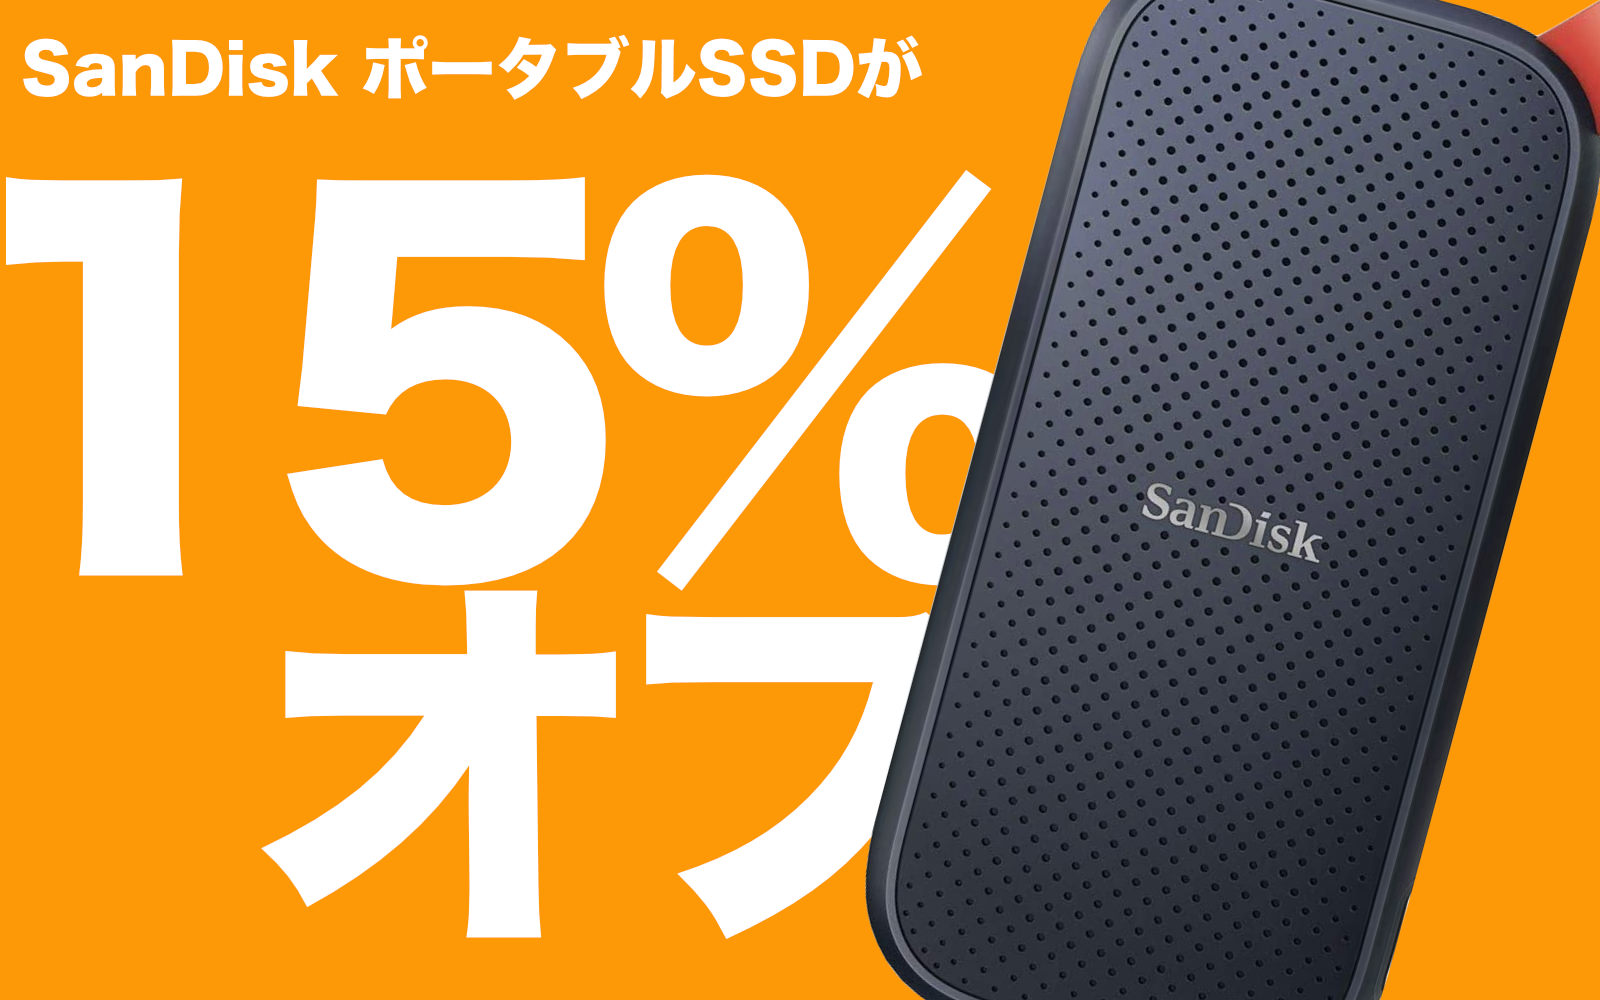 Sandisk SSD 15percent off